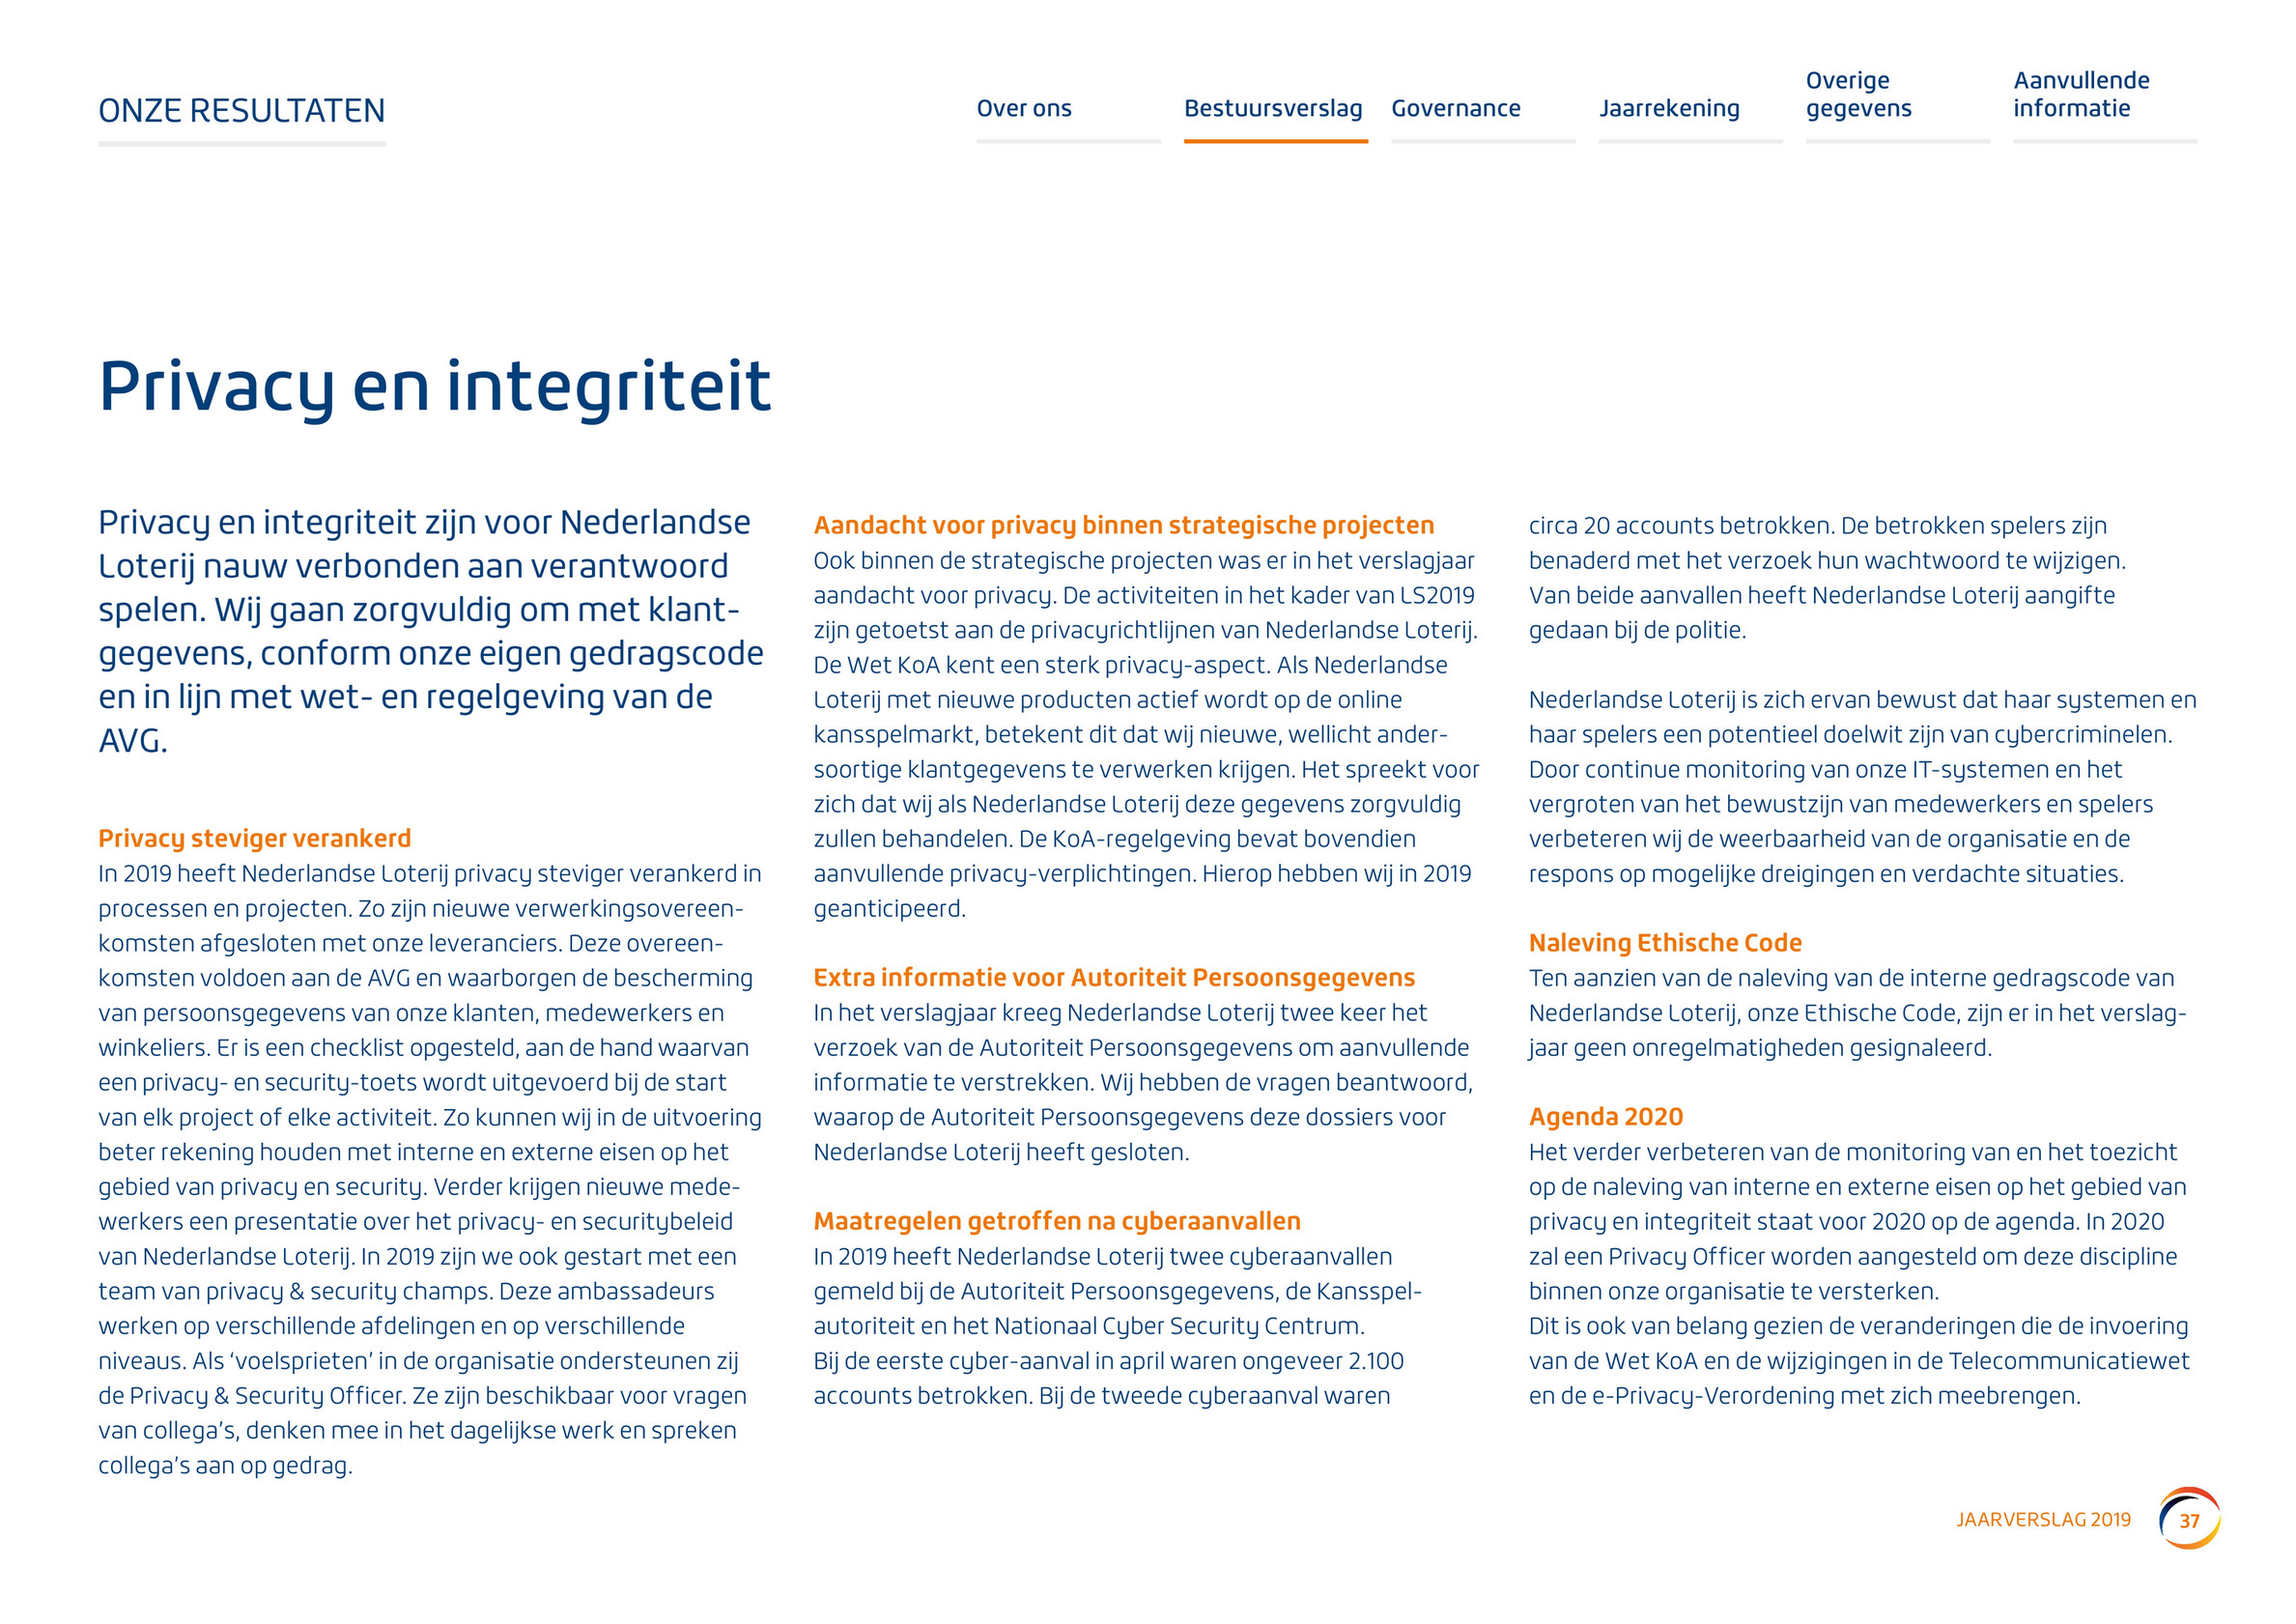 Cfreport Nederlandse Loterij Jaarverslag 2019 Page 37